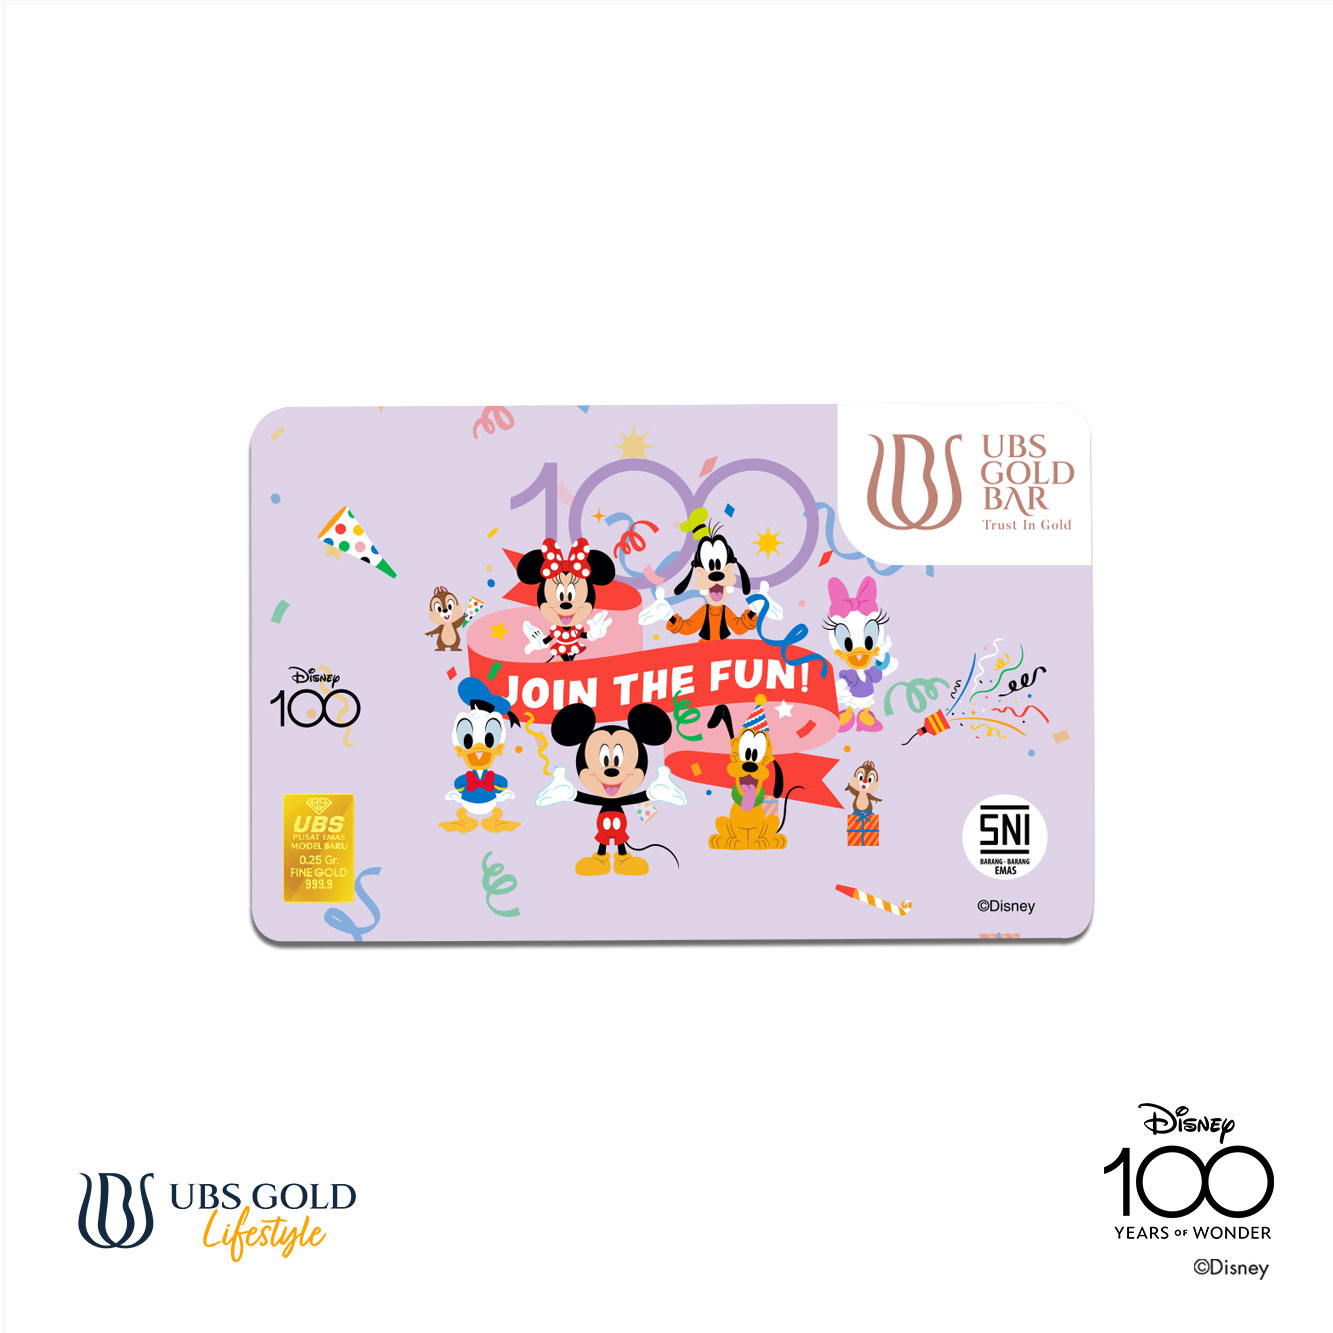 UBS Logam Mulia Disney 100 Edition (P) 0.25 Gr